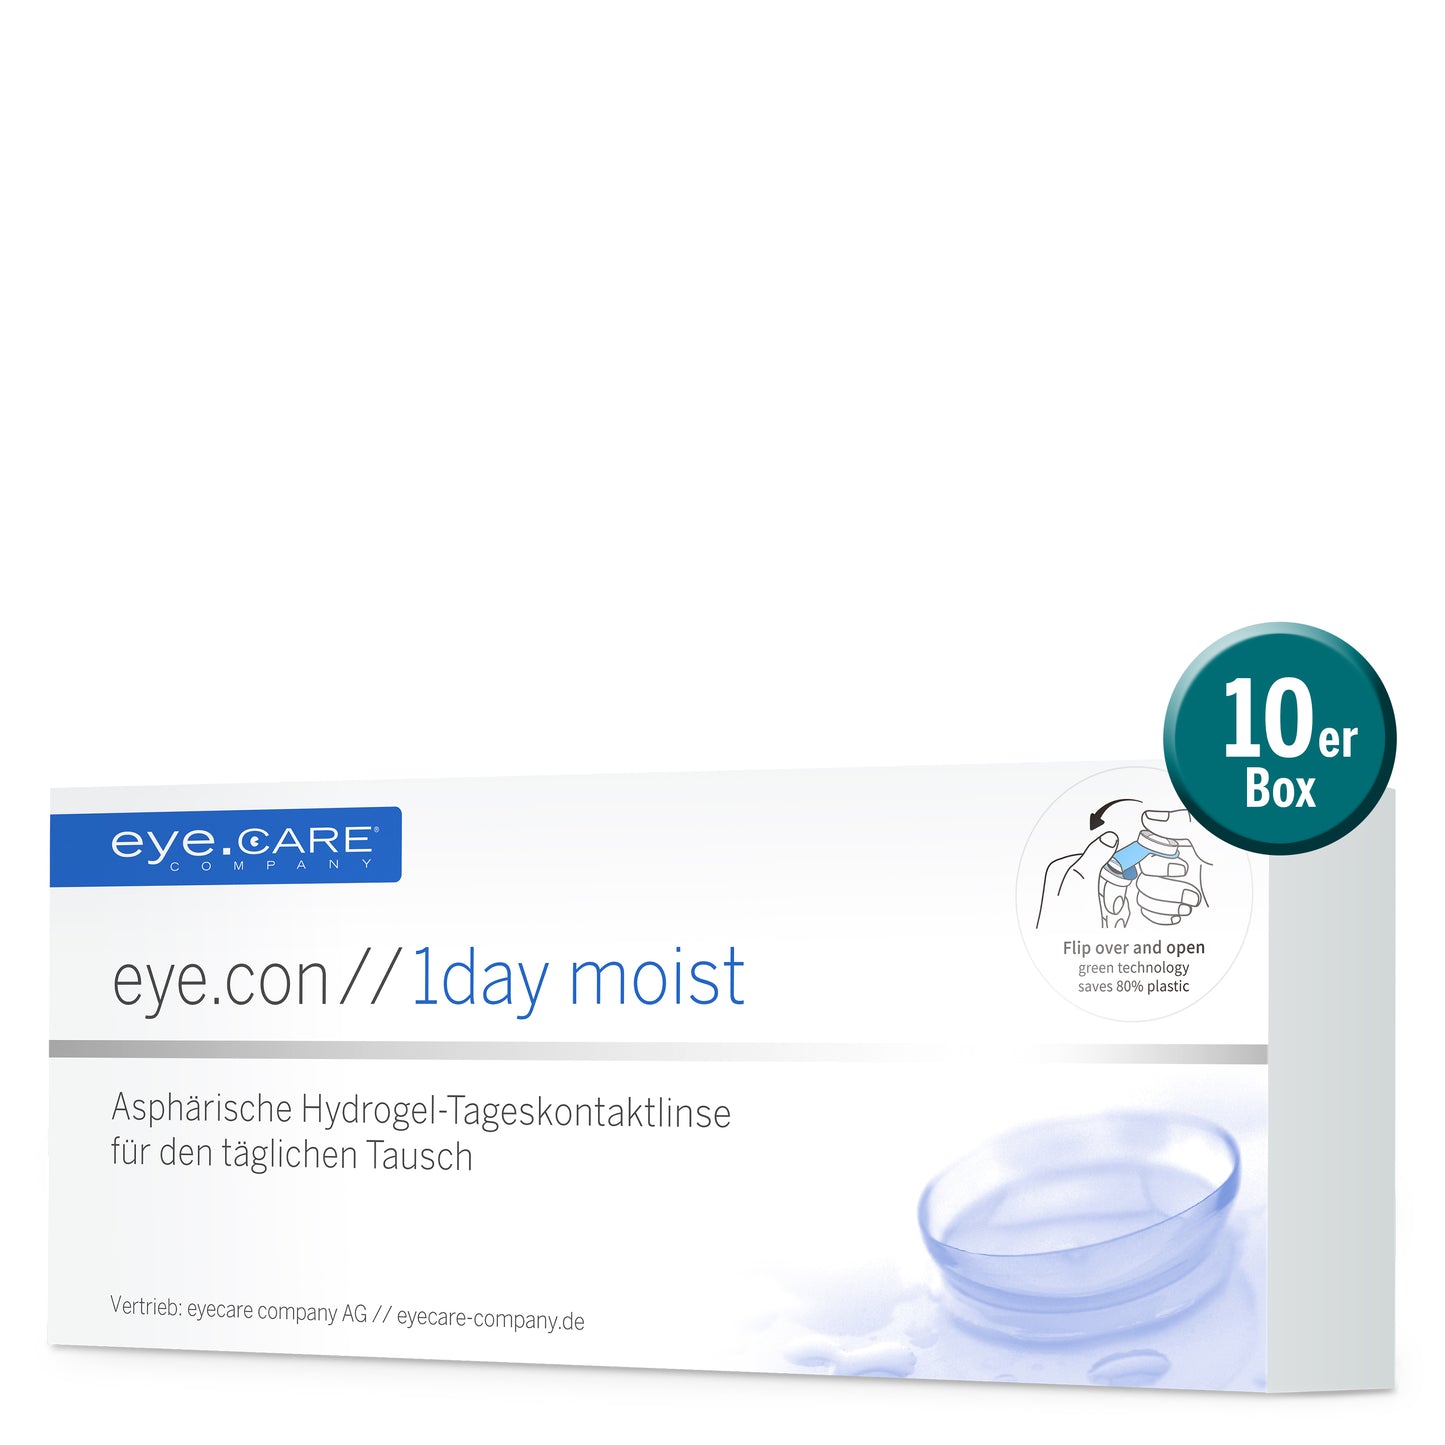 eye.con // 1day moist 10er Box